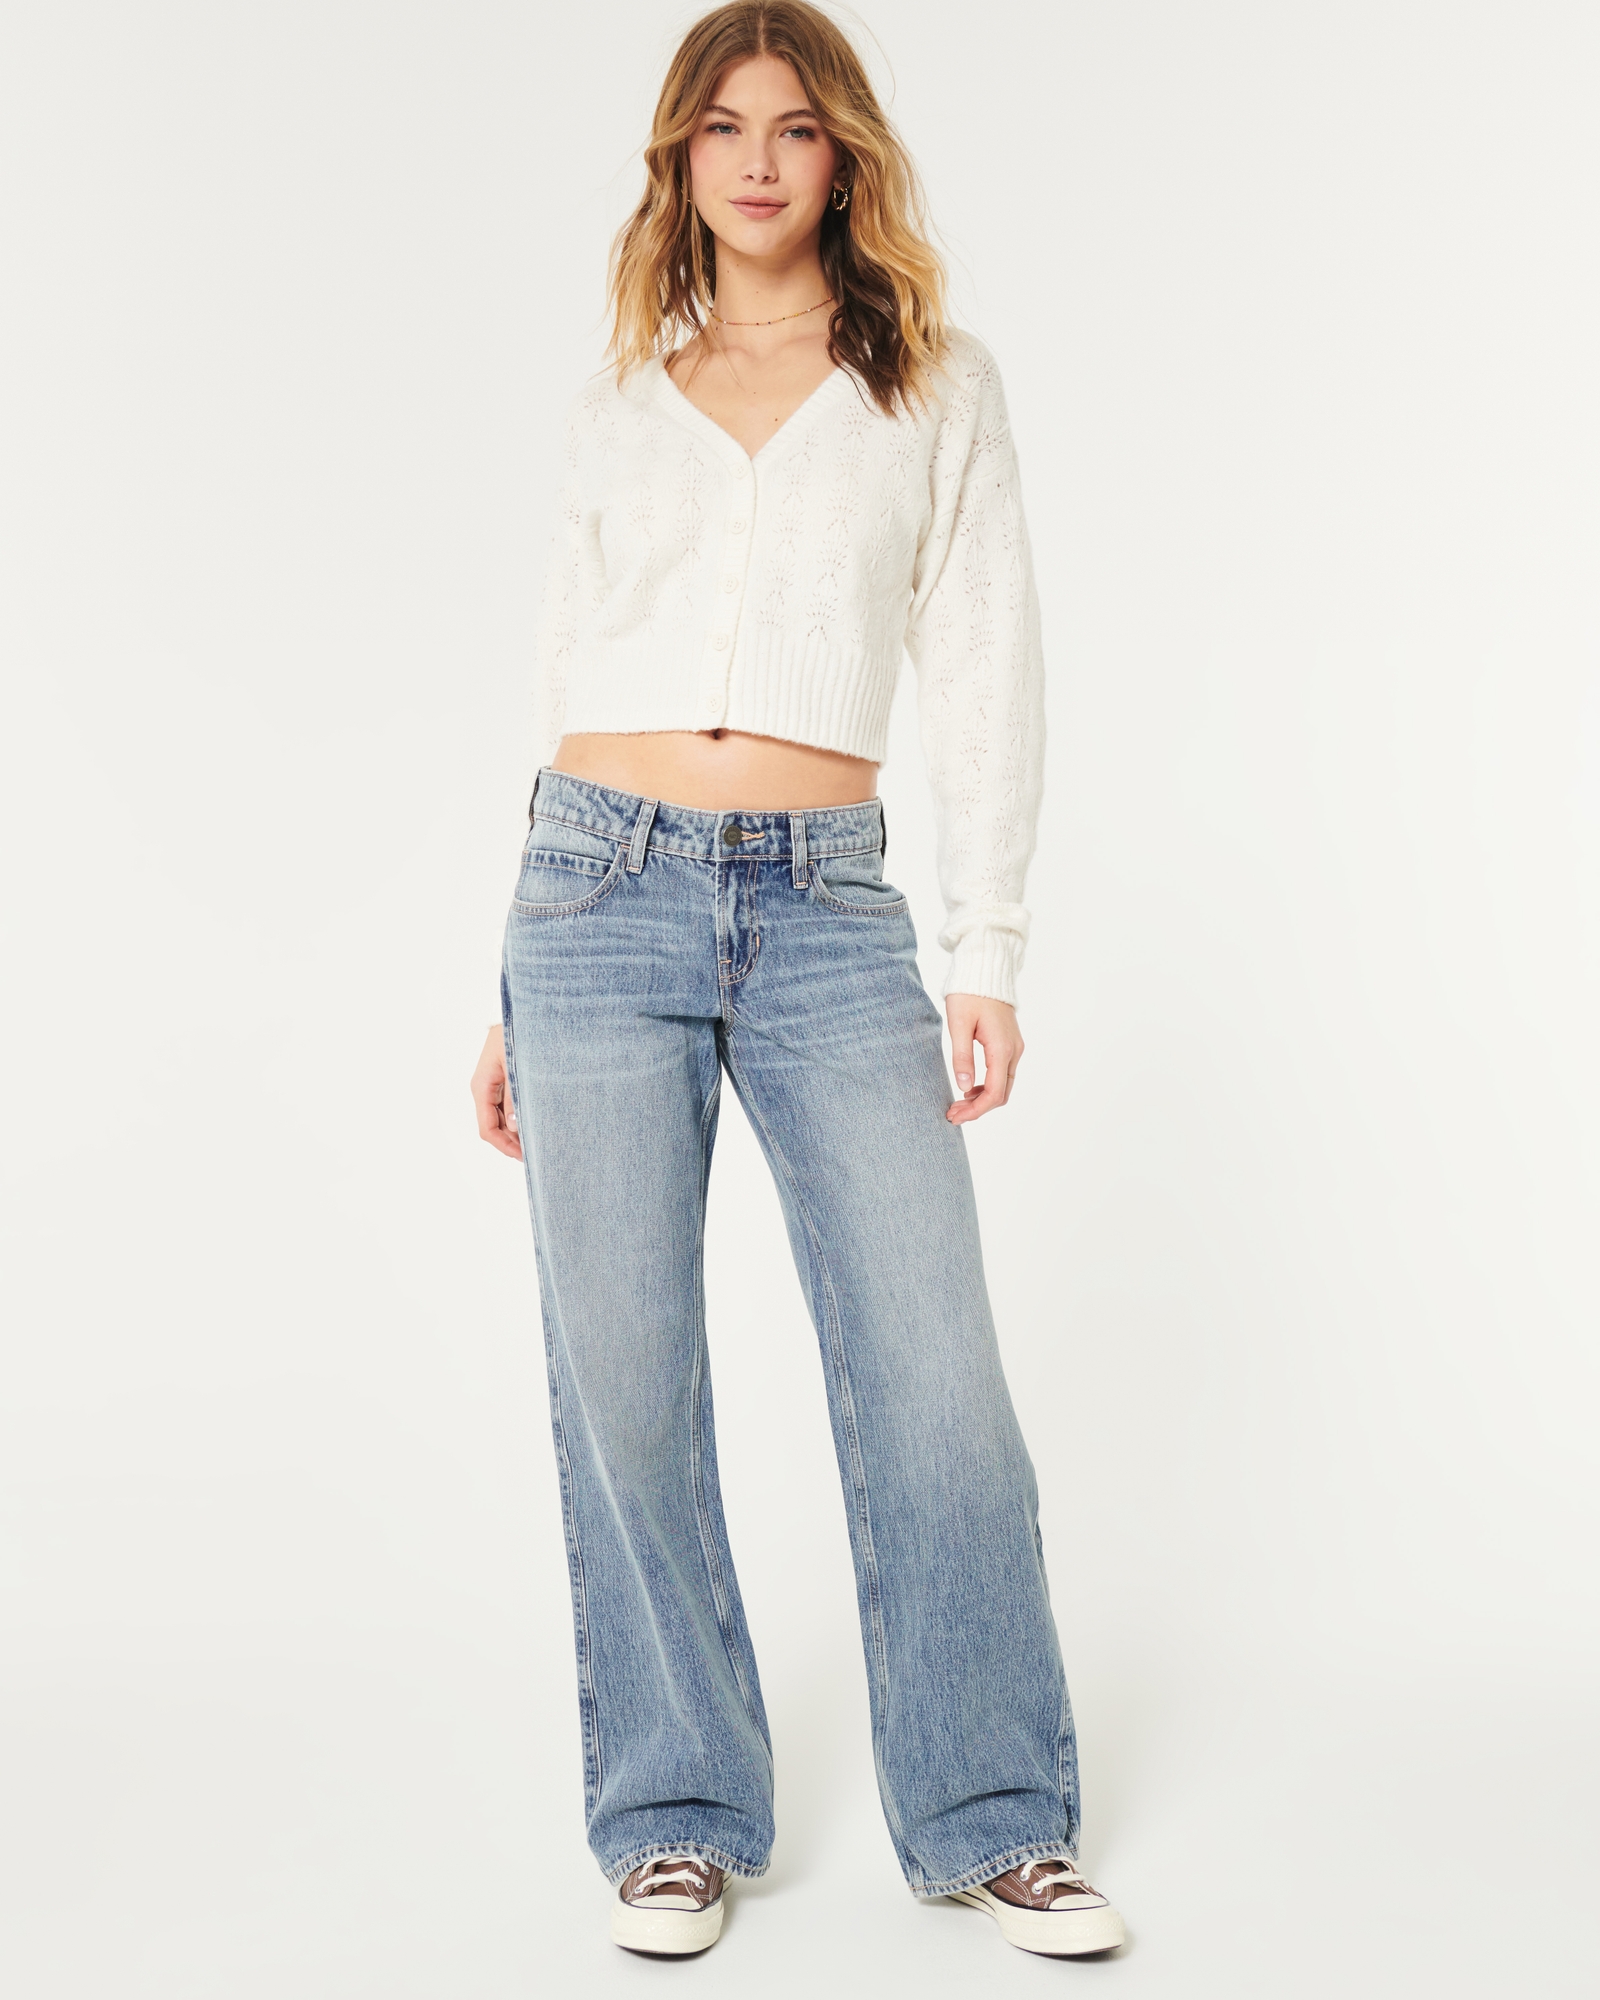 Hollister Jeans Women Size 7S W 28 L28 Low Rise Super Skinny